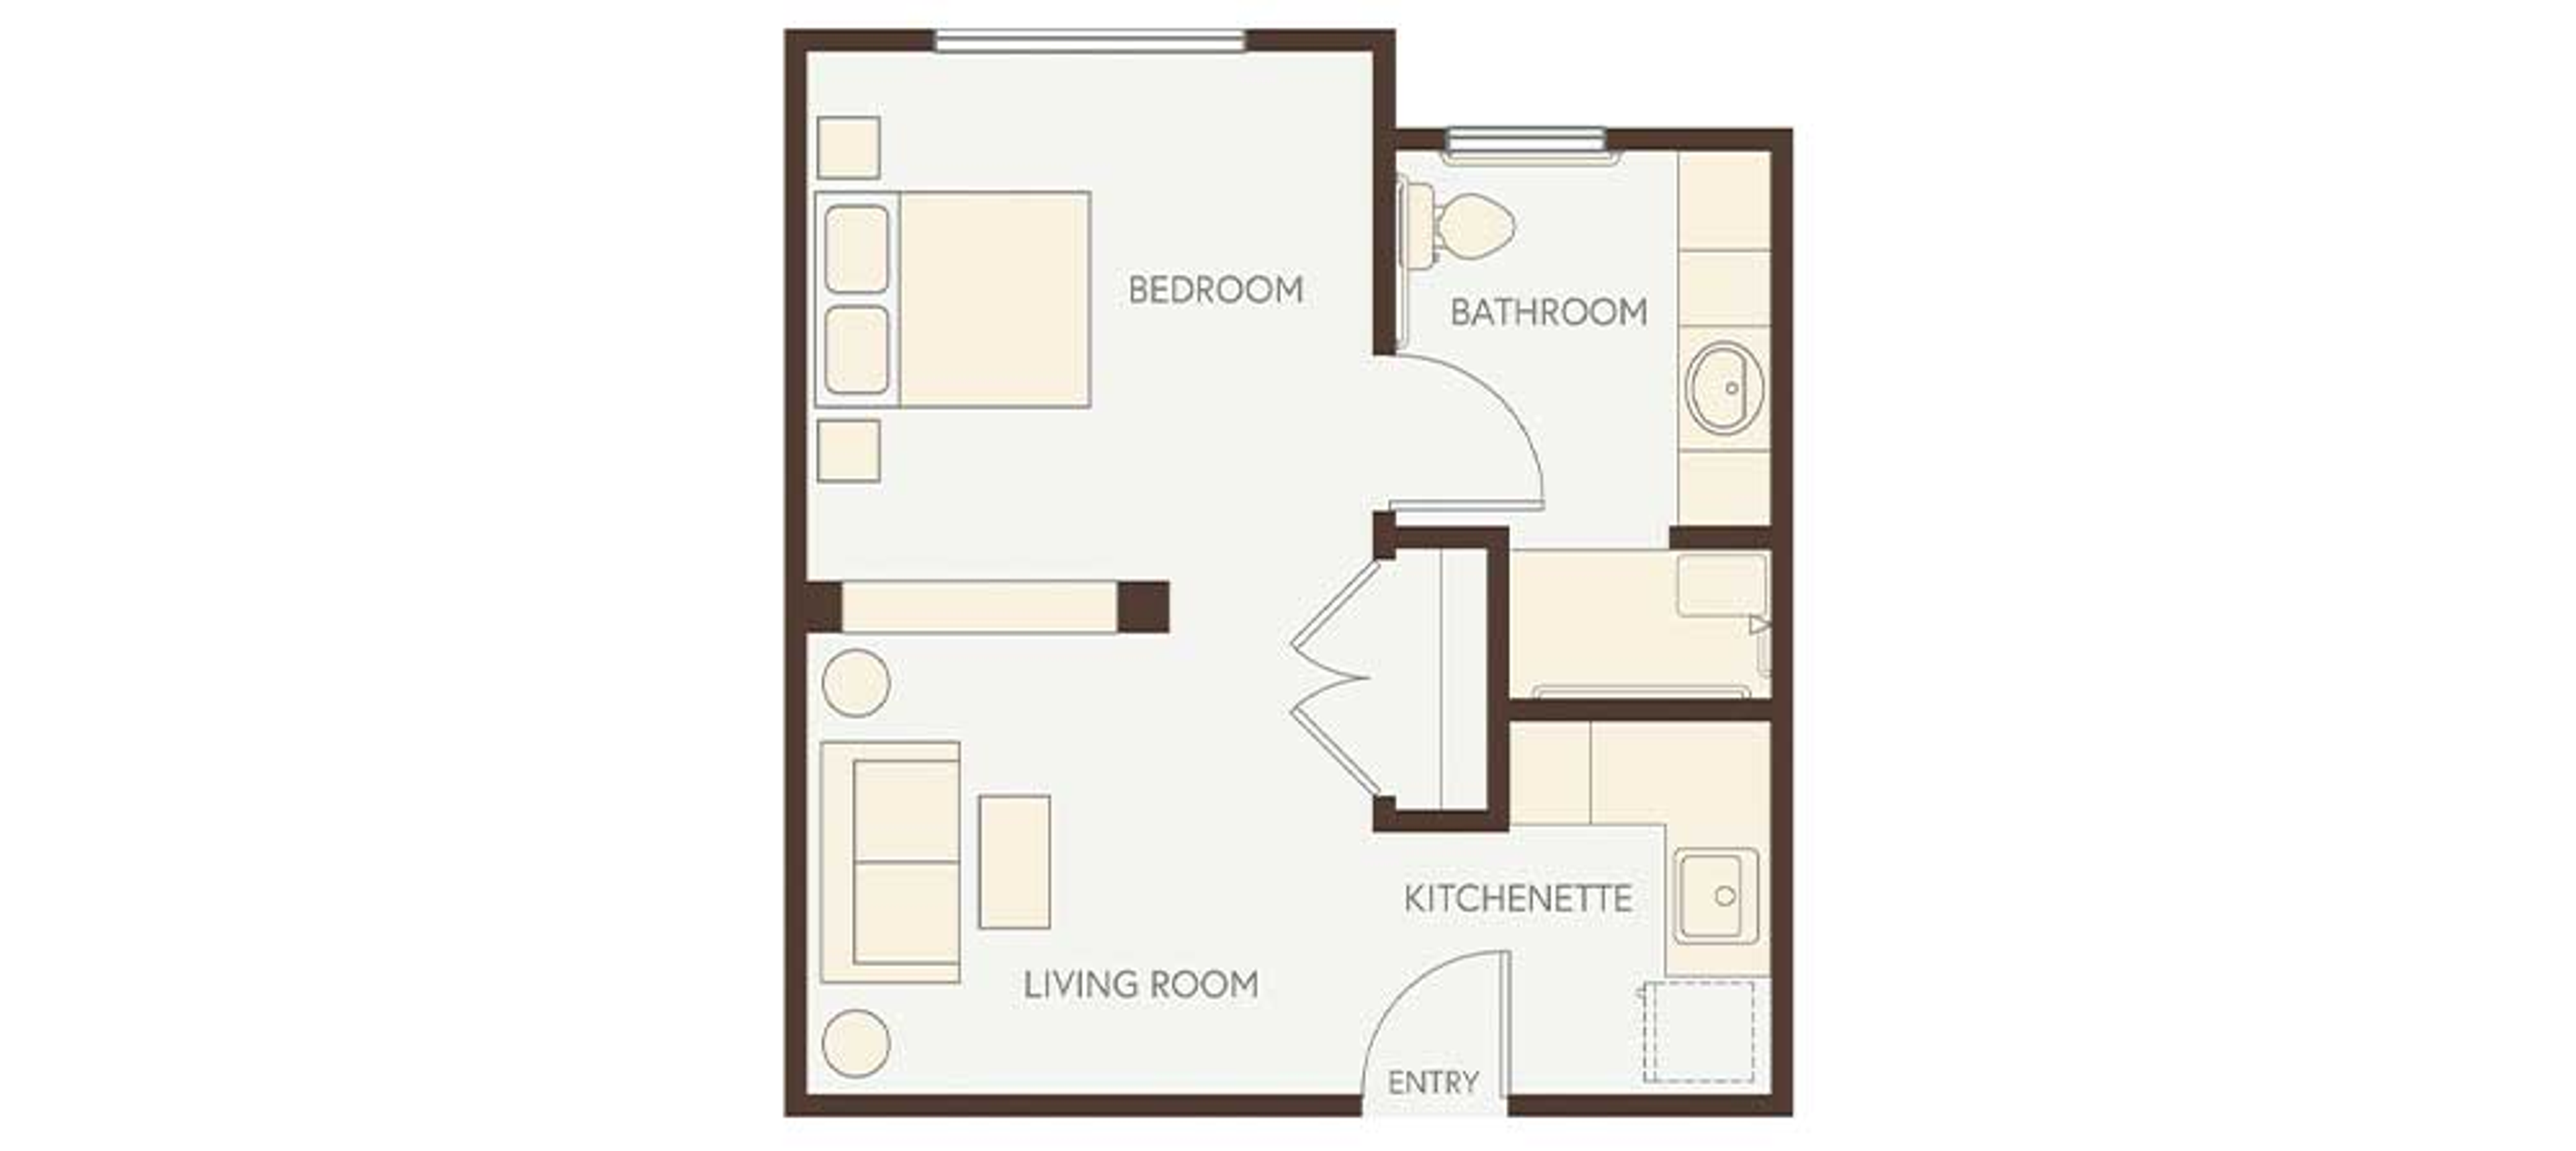 Floorplan - Heartis San Antonio - 1 Bed 1 Bath 370 sq. ft. Assisted Living